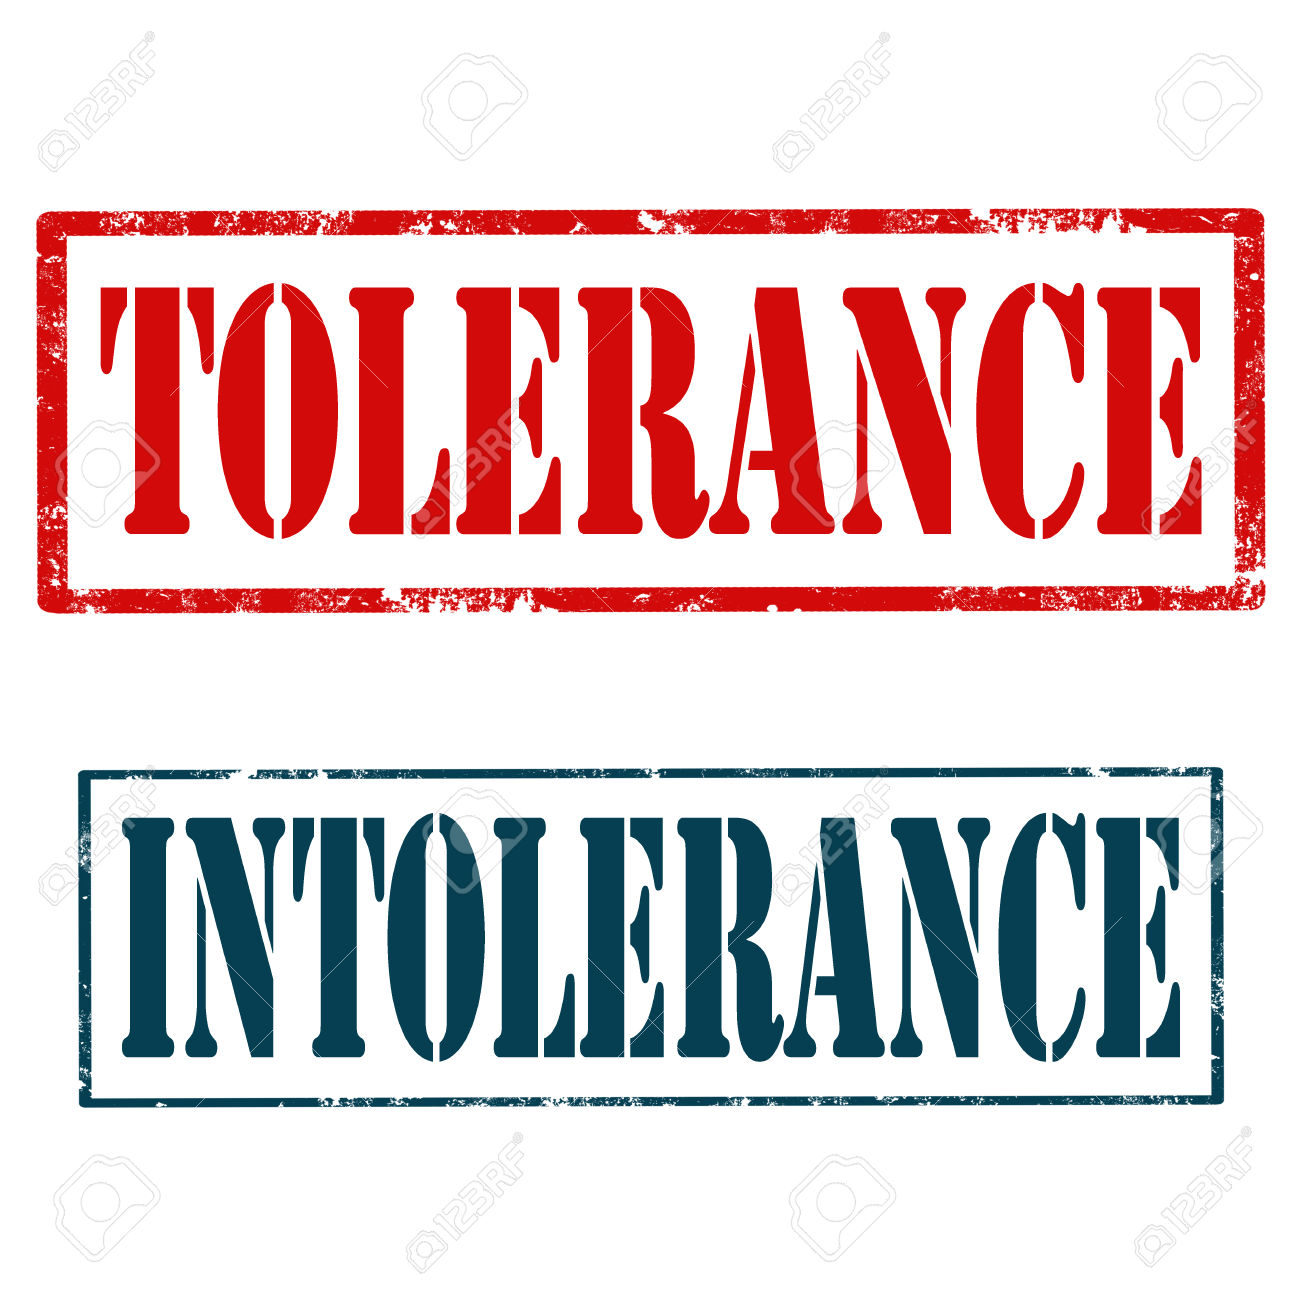 Intolerance #6